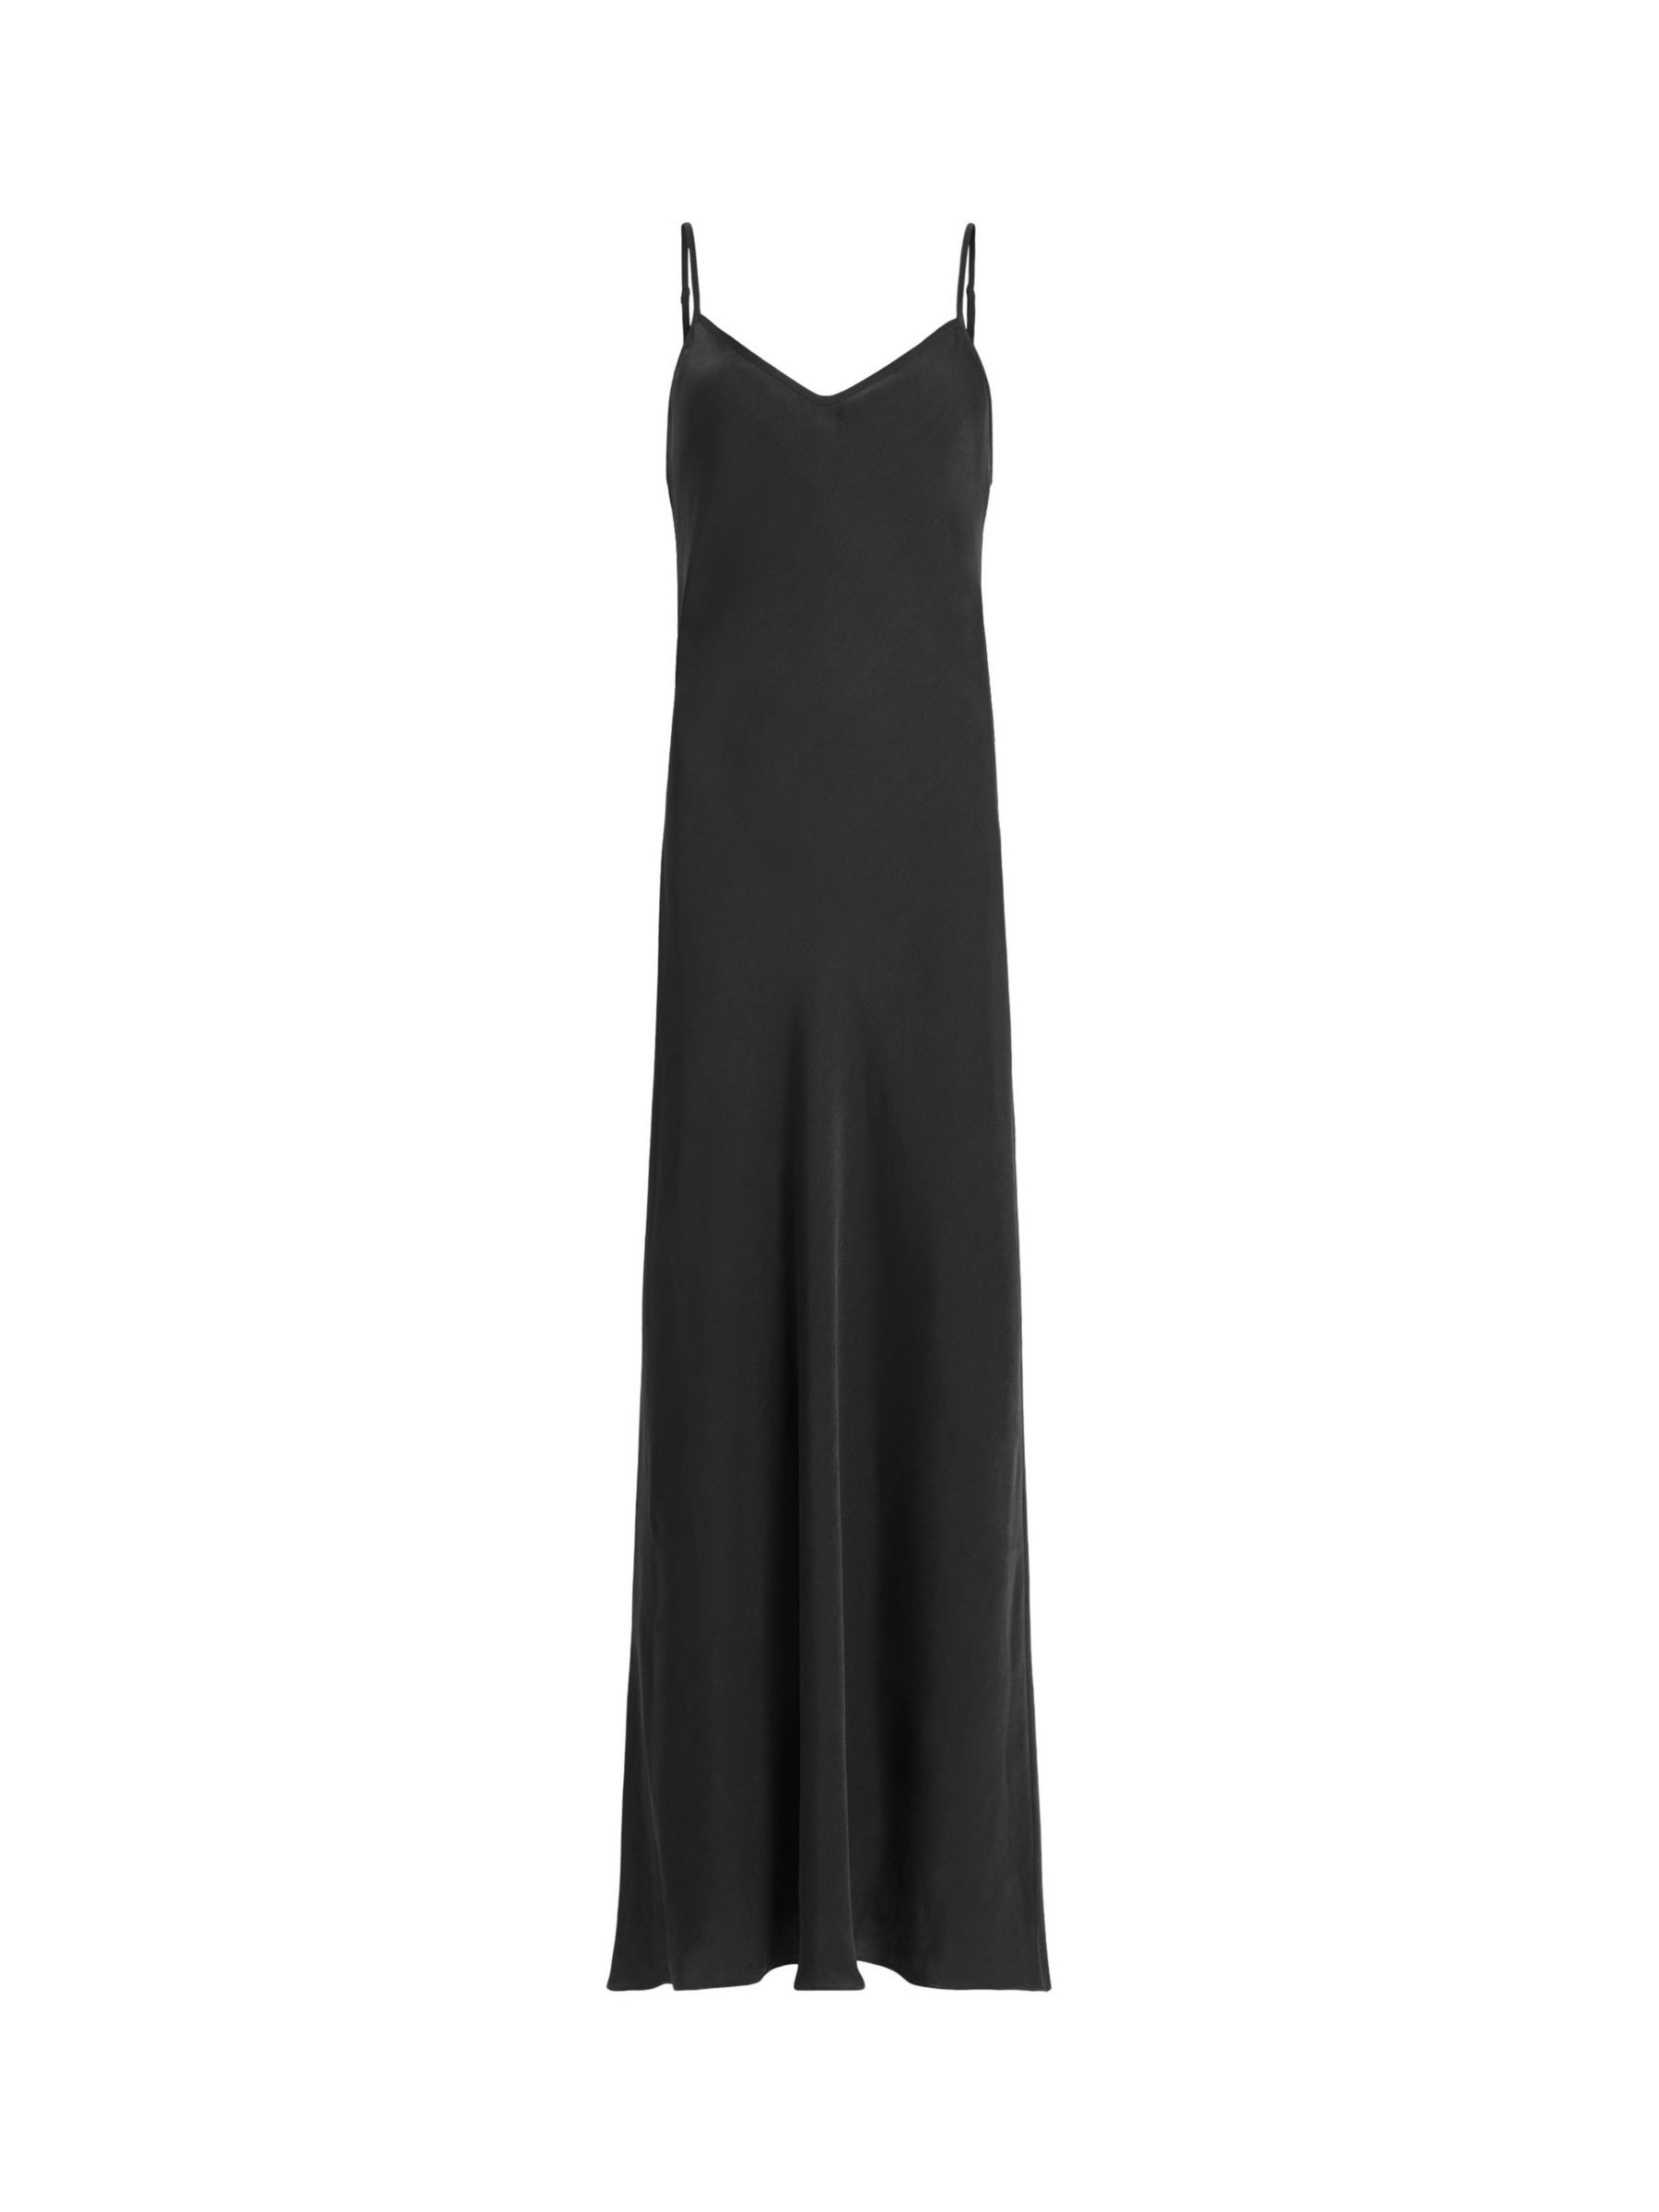 AllSaints Bryony Slip Midi Dress, Black at John Lewis & Partners